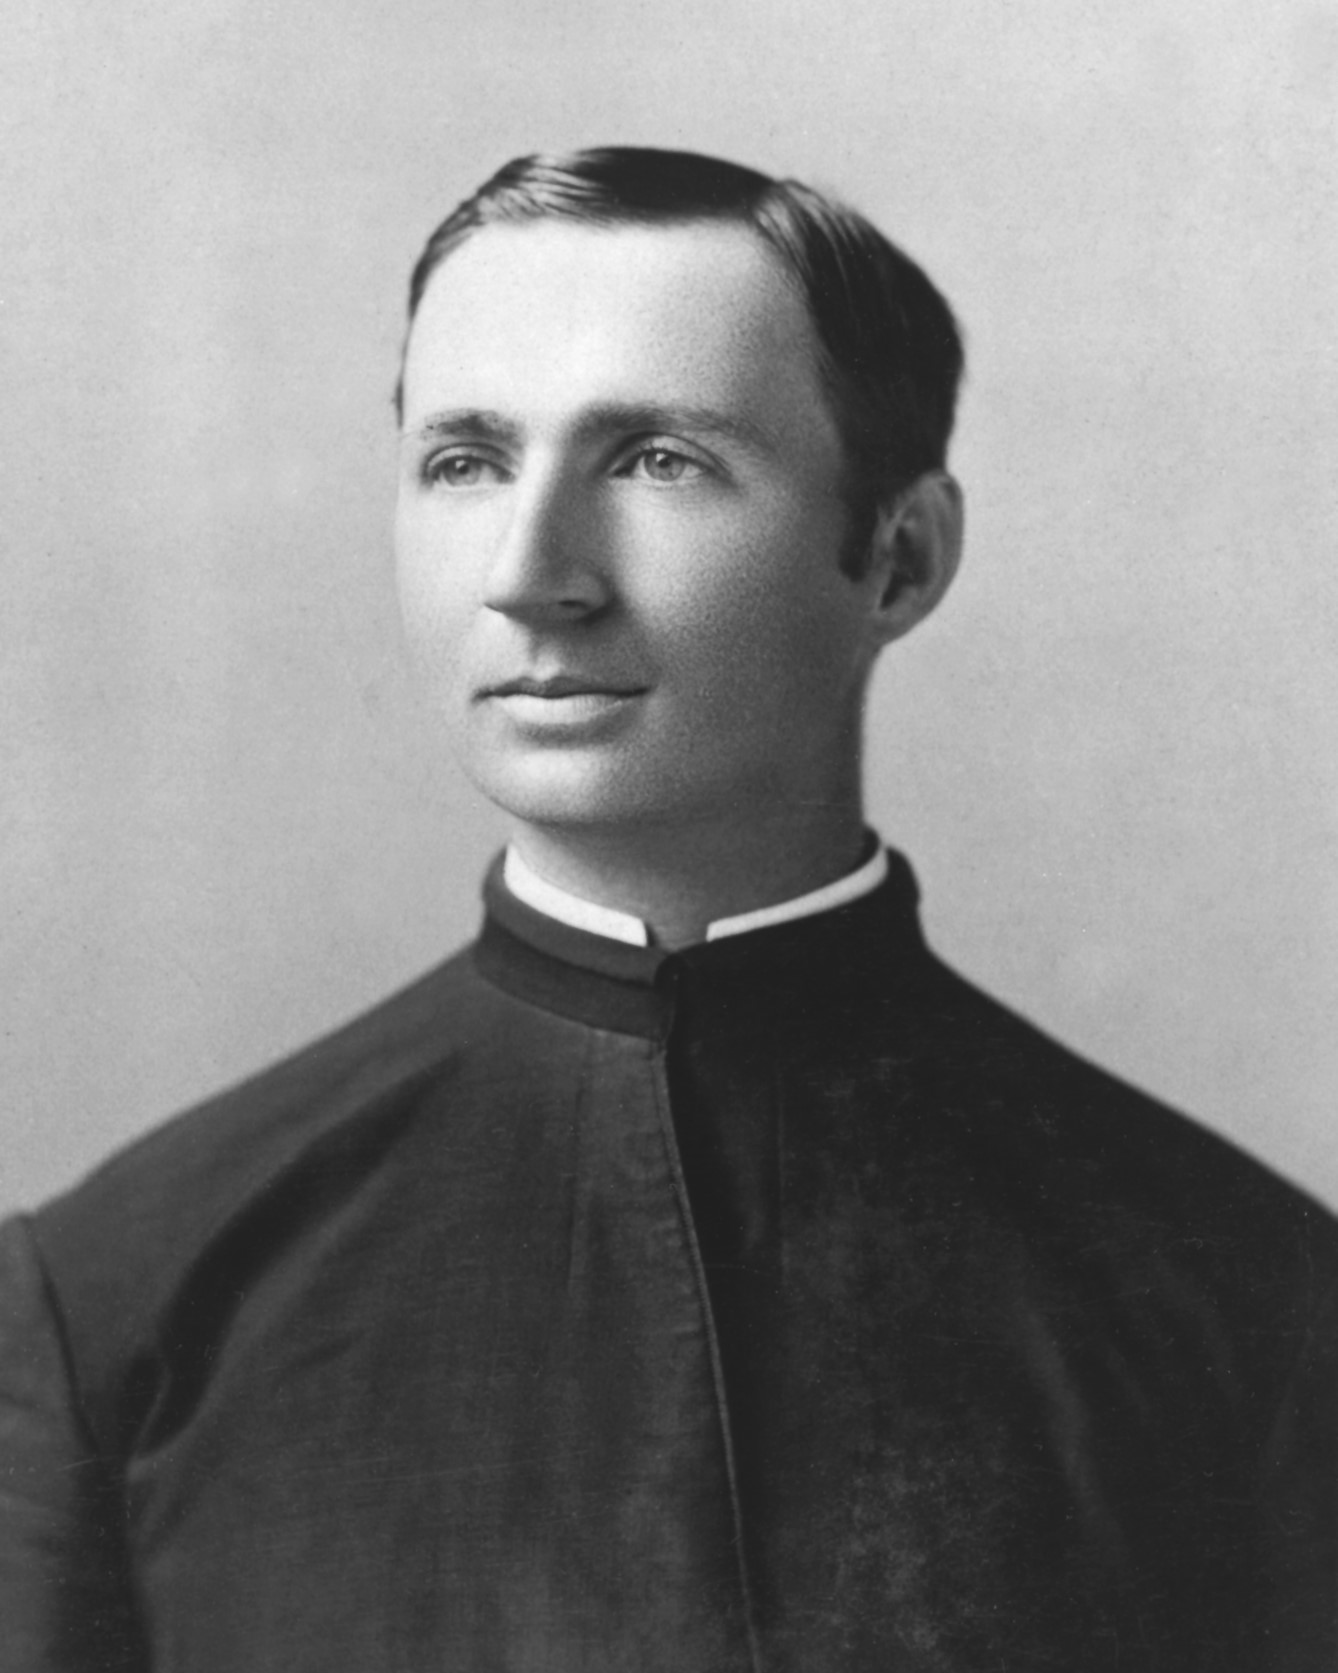 Fr. Francis J. Finn, SJ